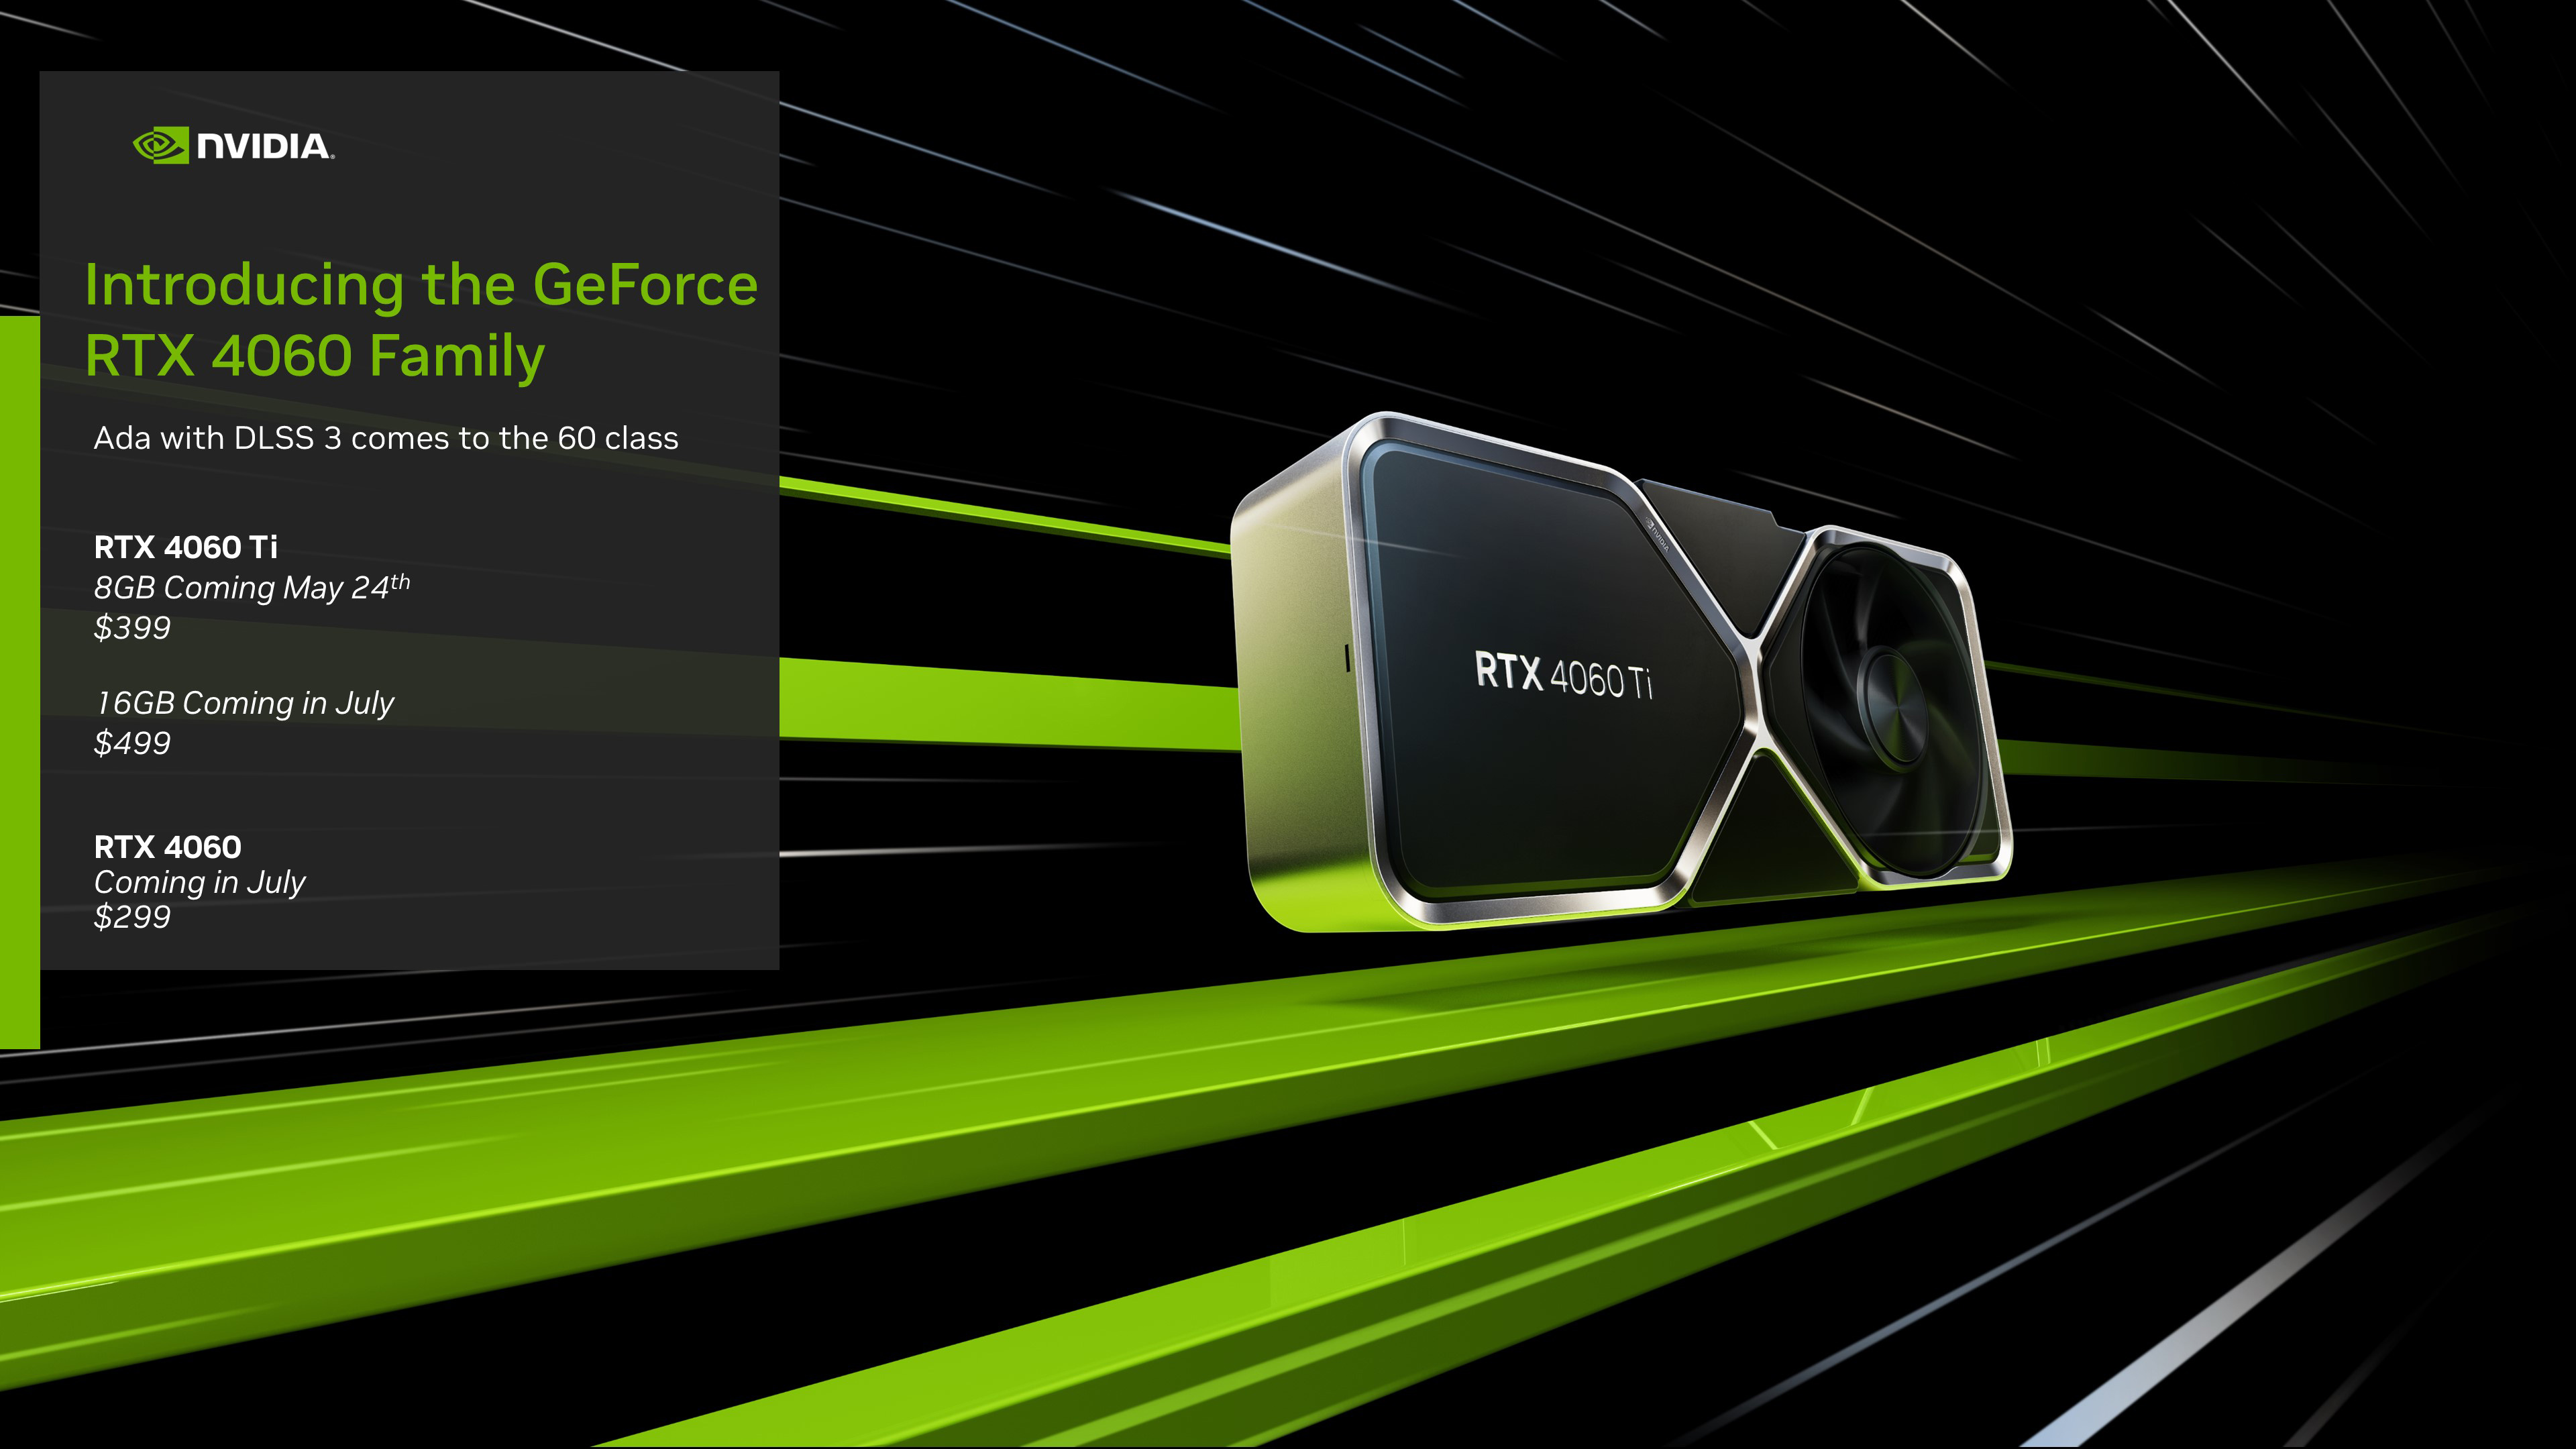 Geforce Rtx 4060 및 Rtx 4060 Ti 발표: 5월 24일부터 구매 가능, $299부터 시작 | Geforce 뉴스 |  Nvidia